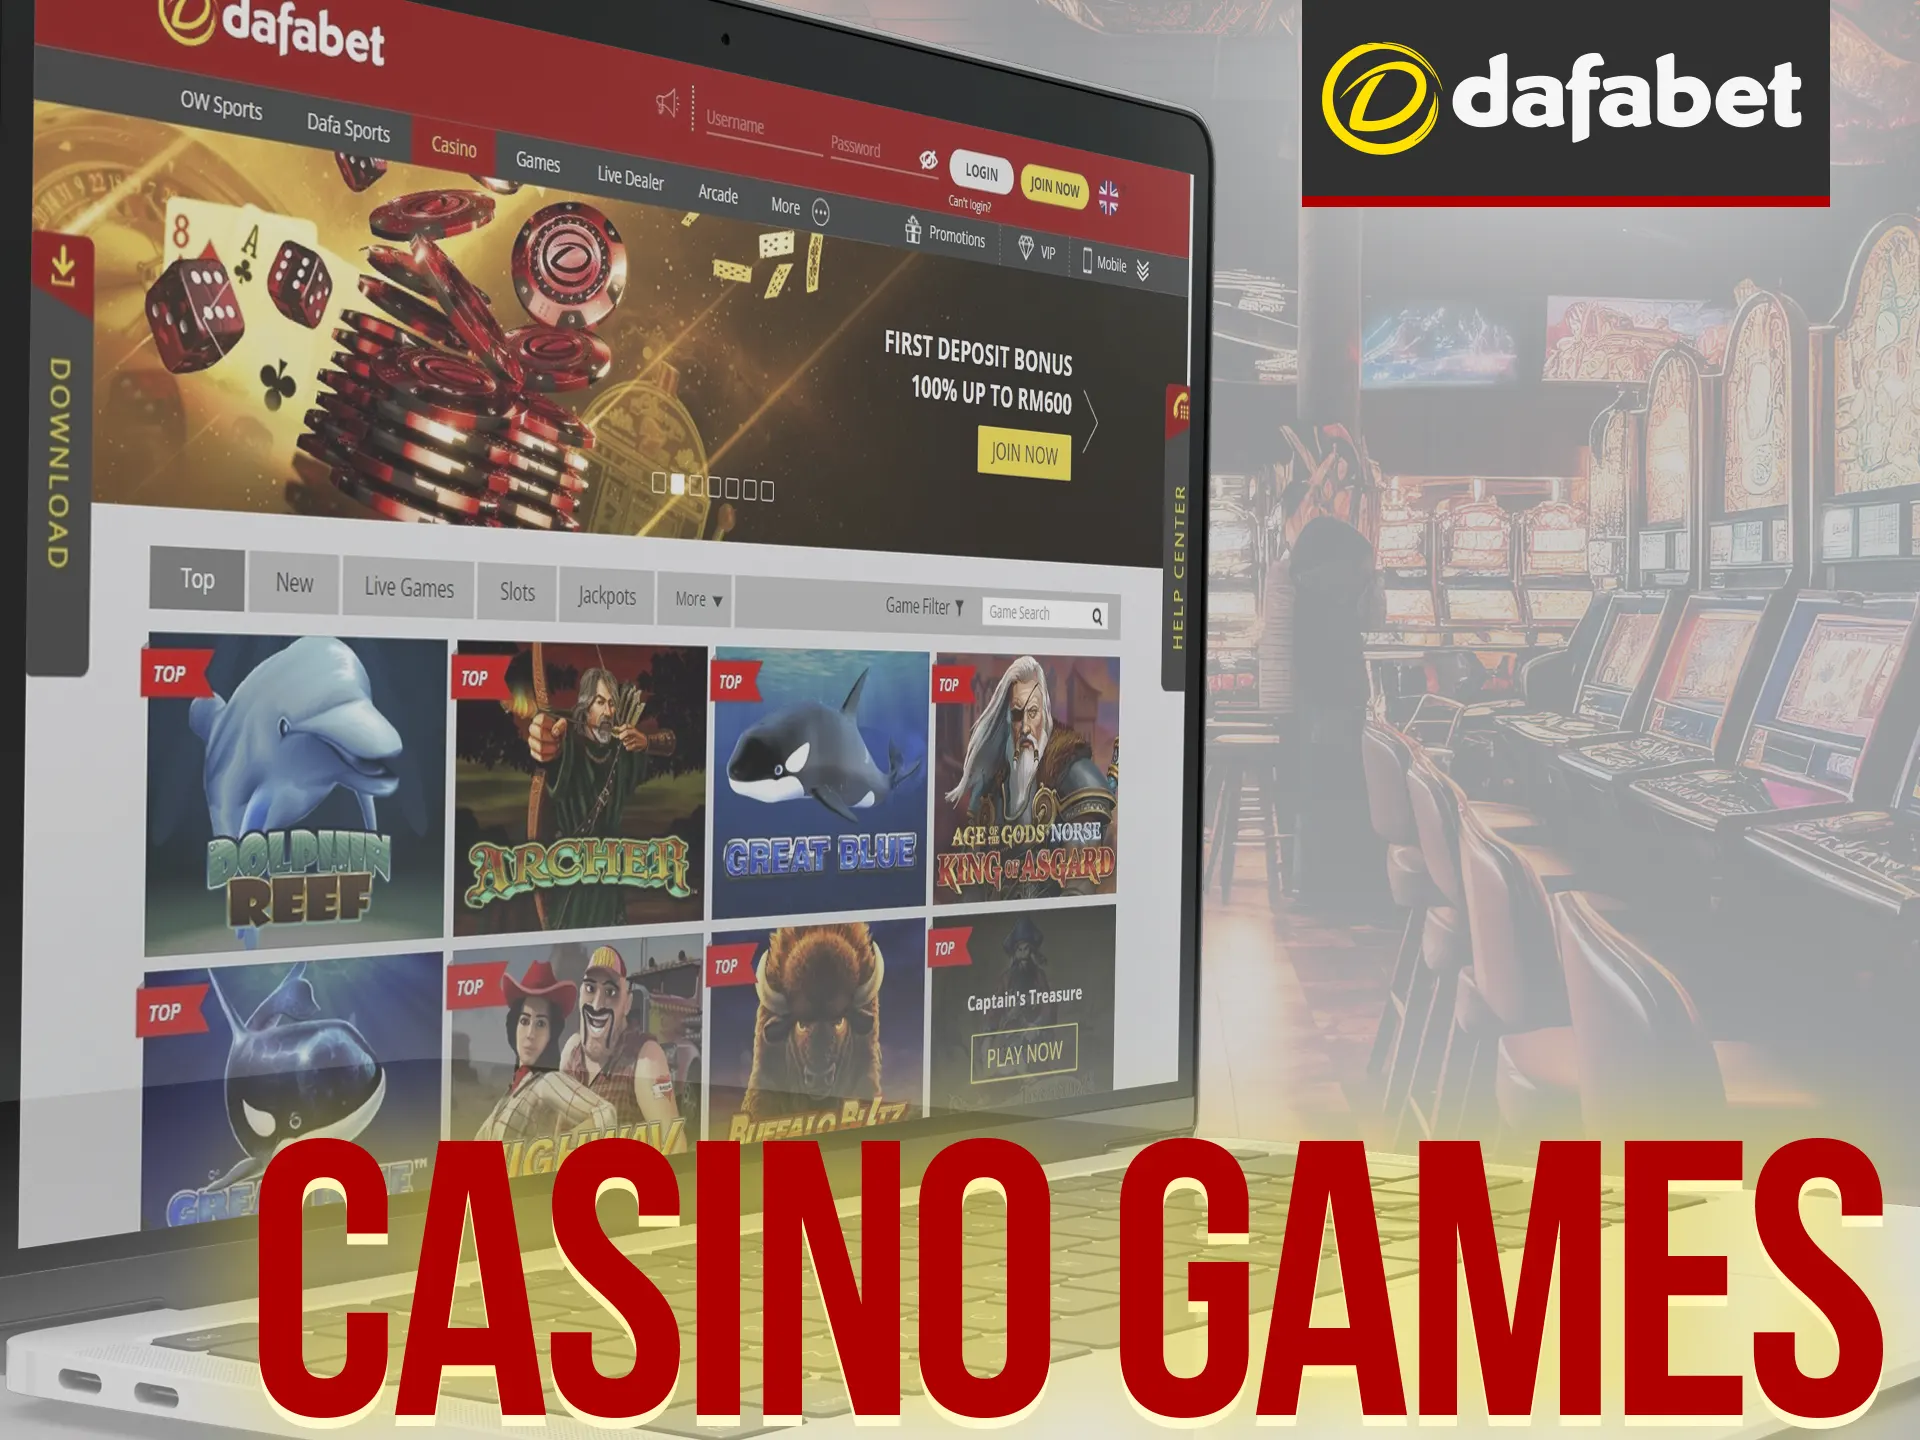 Enjoy an incredible number of Casino Games at Dafabet.